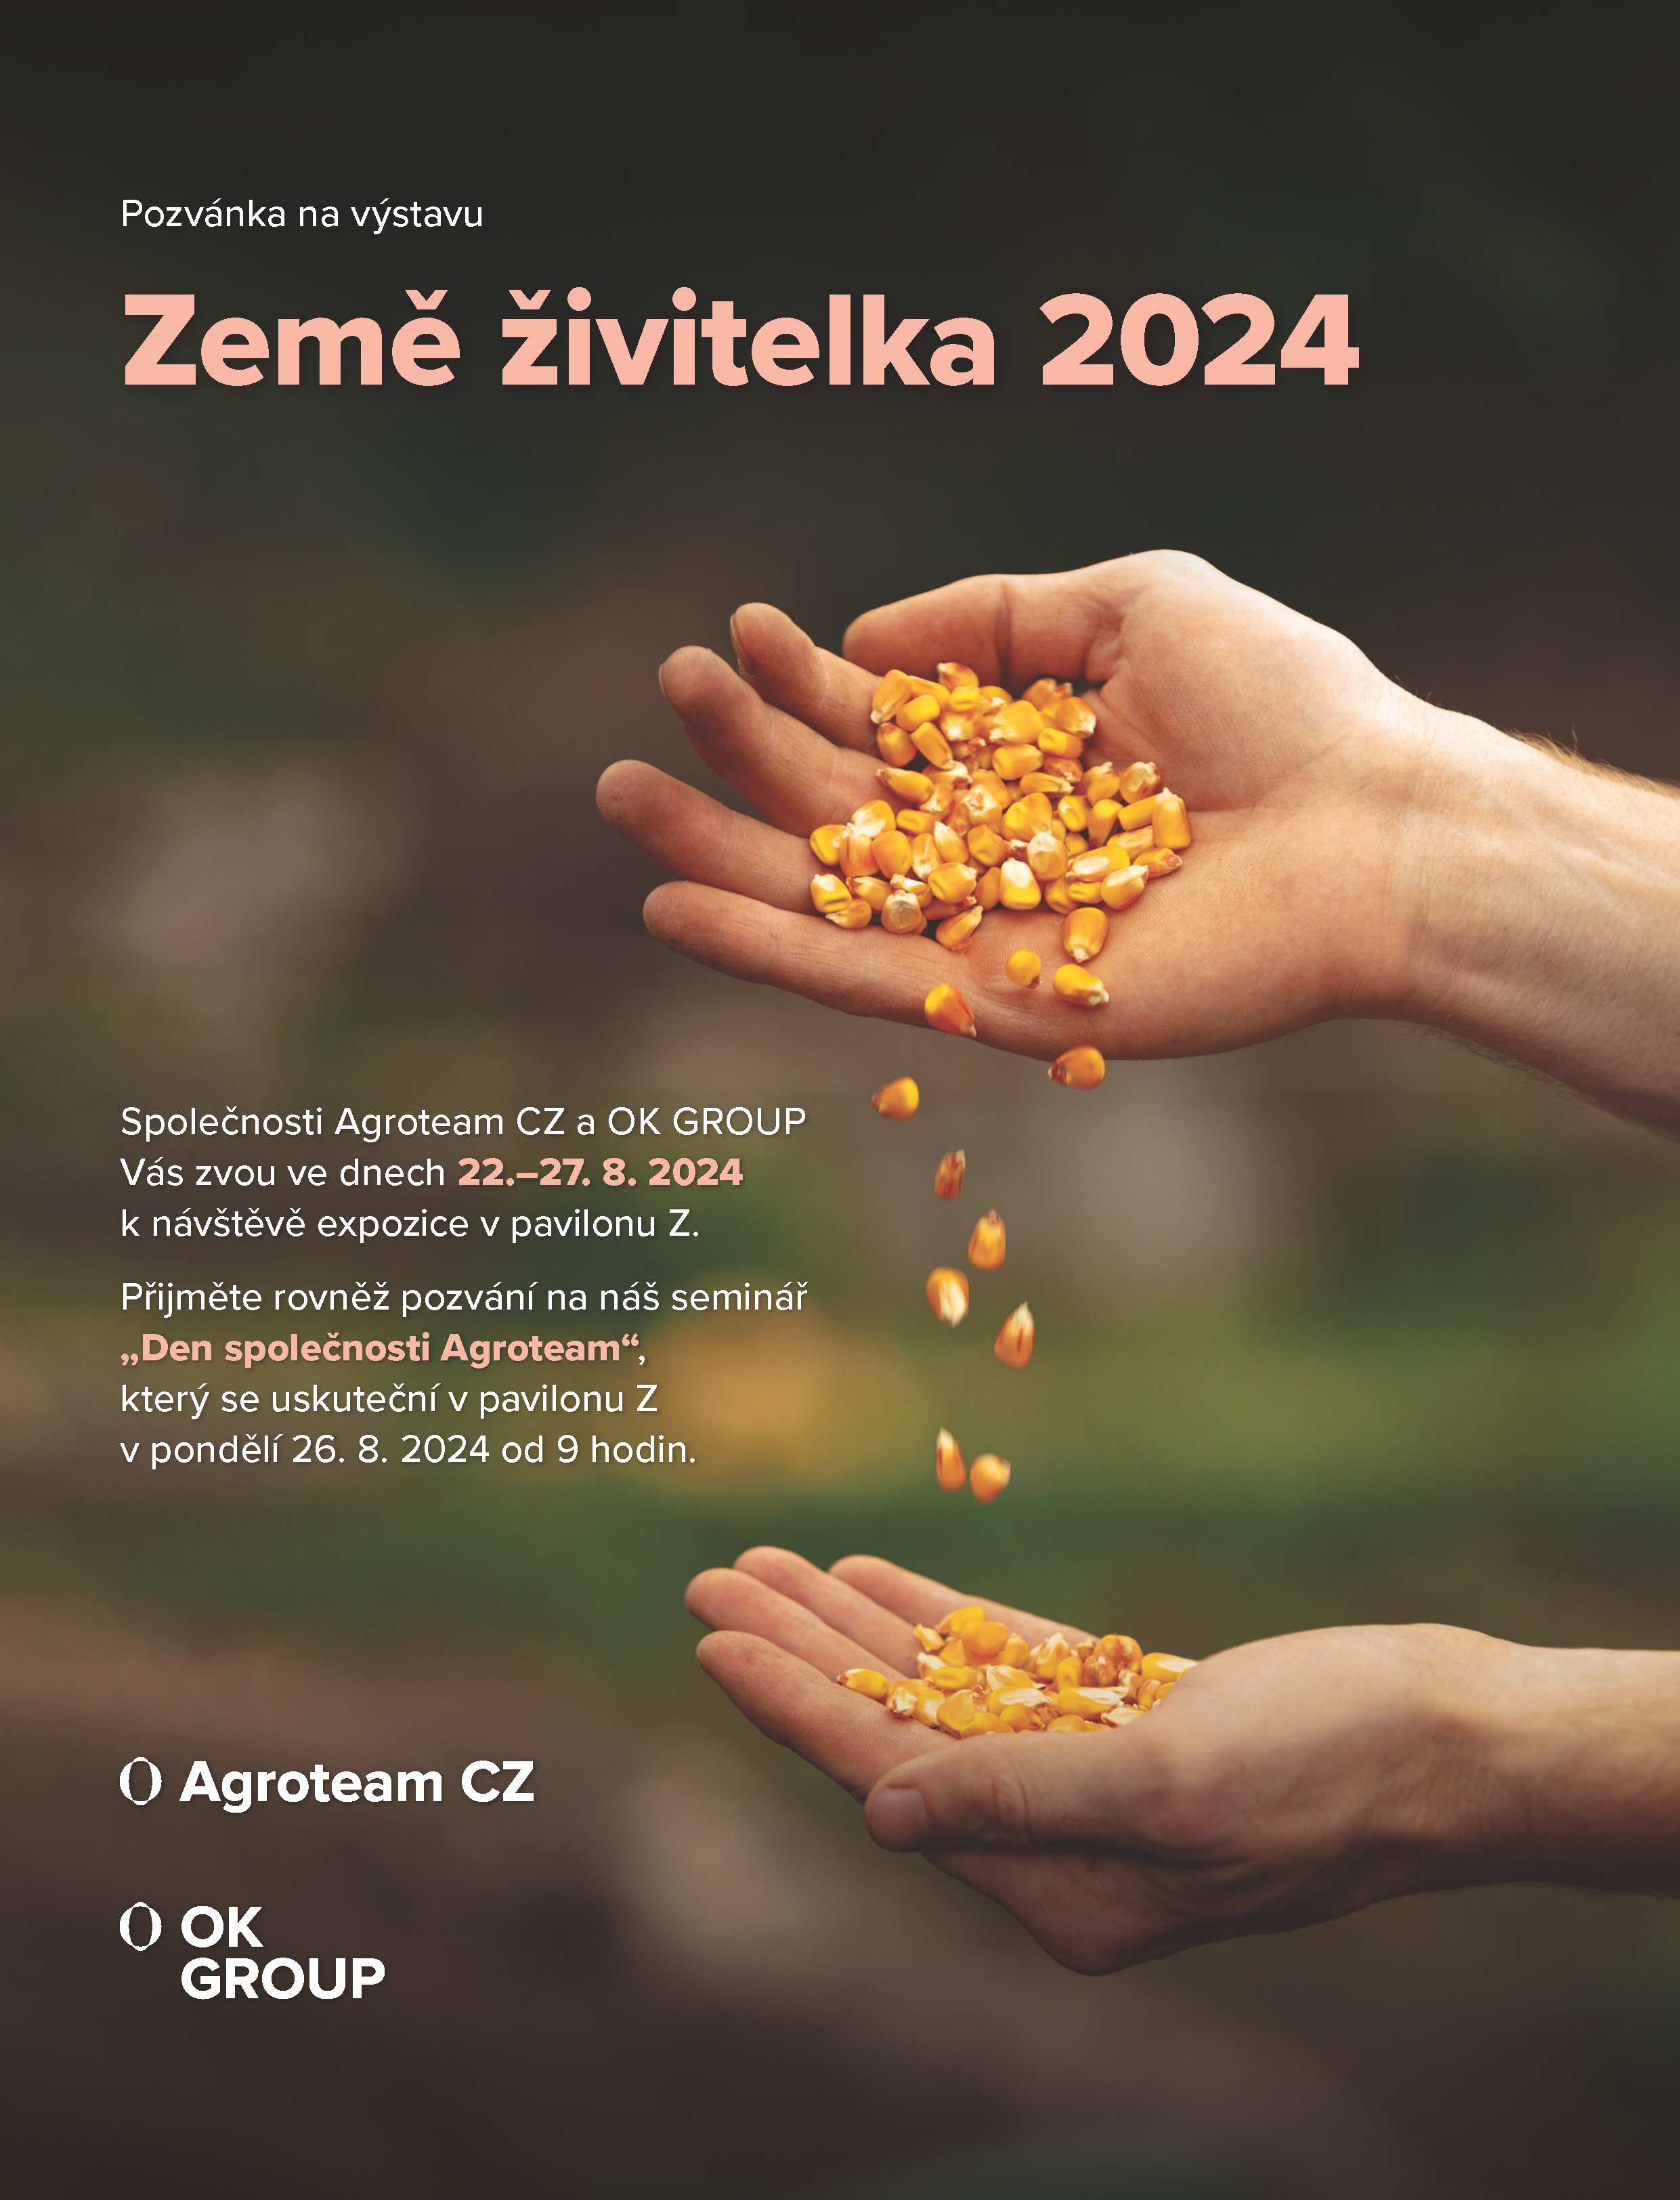 https://www.agroteam.cz/media/aktuality/obrazky/zeme-zivitelka-bulletin-210x275mm-1.png